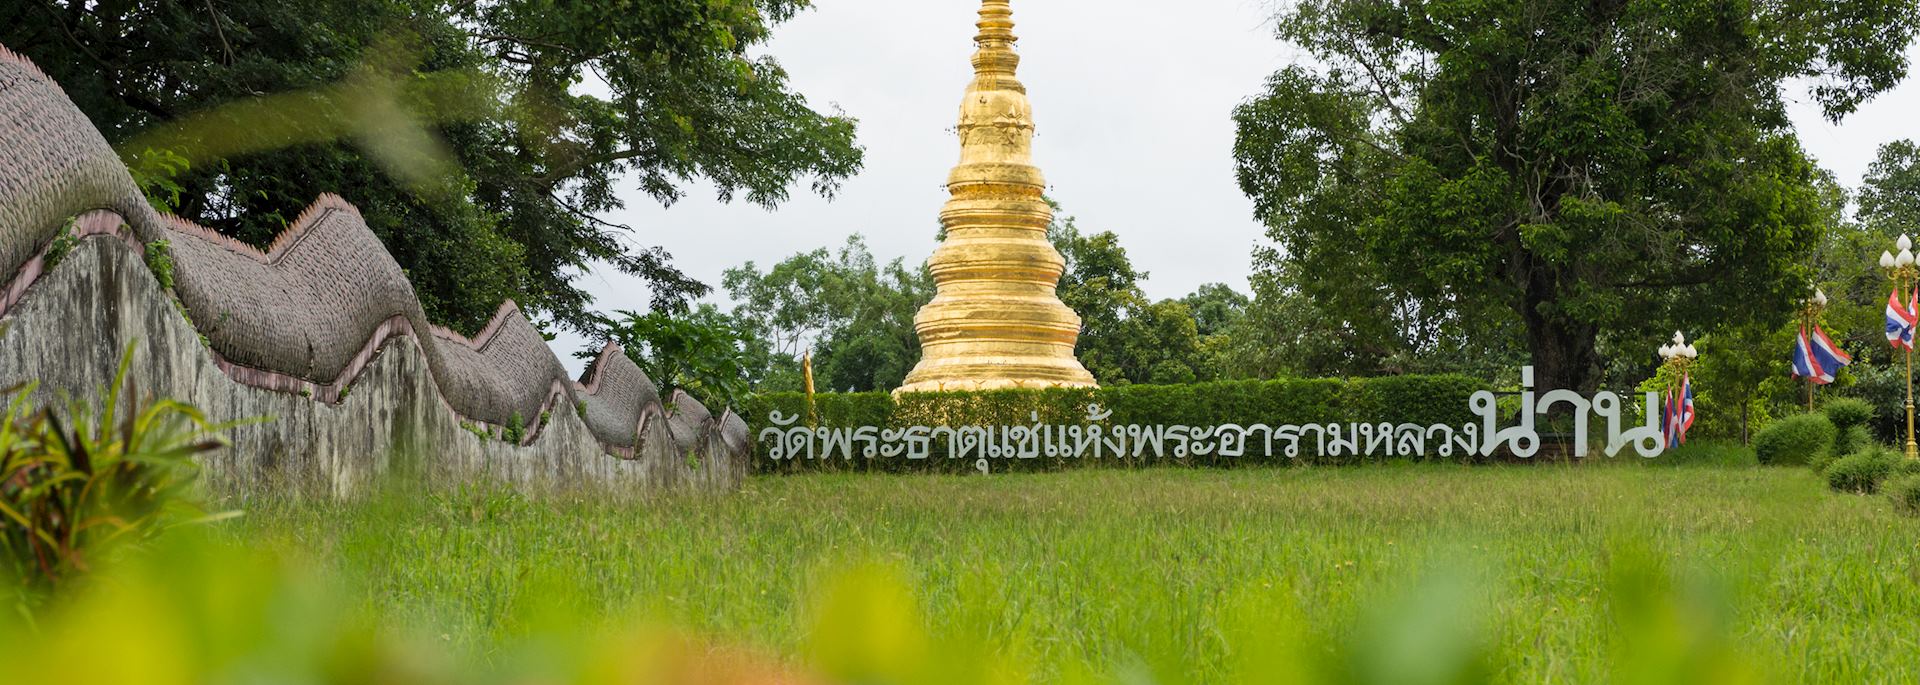 Wat Phrathat Chae Haeng temple, Nan